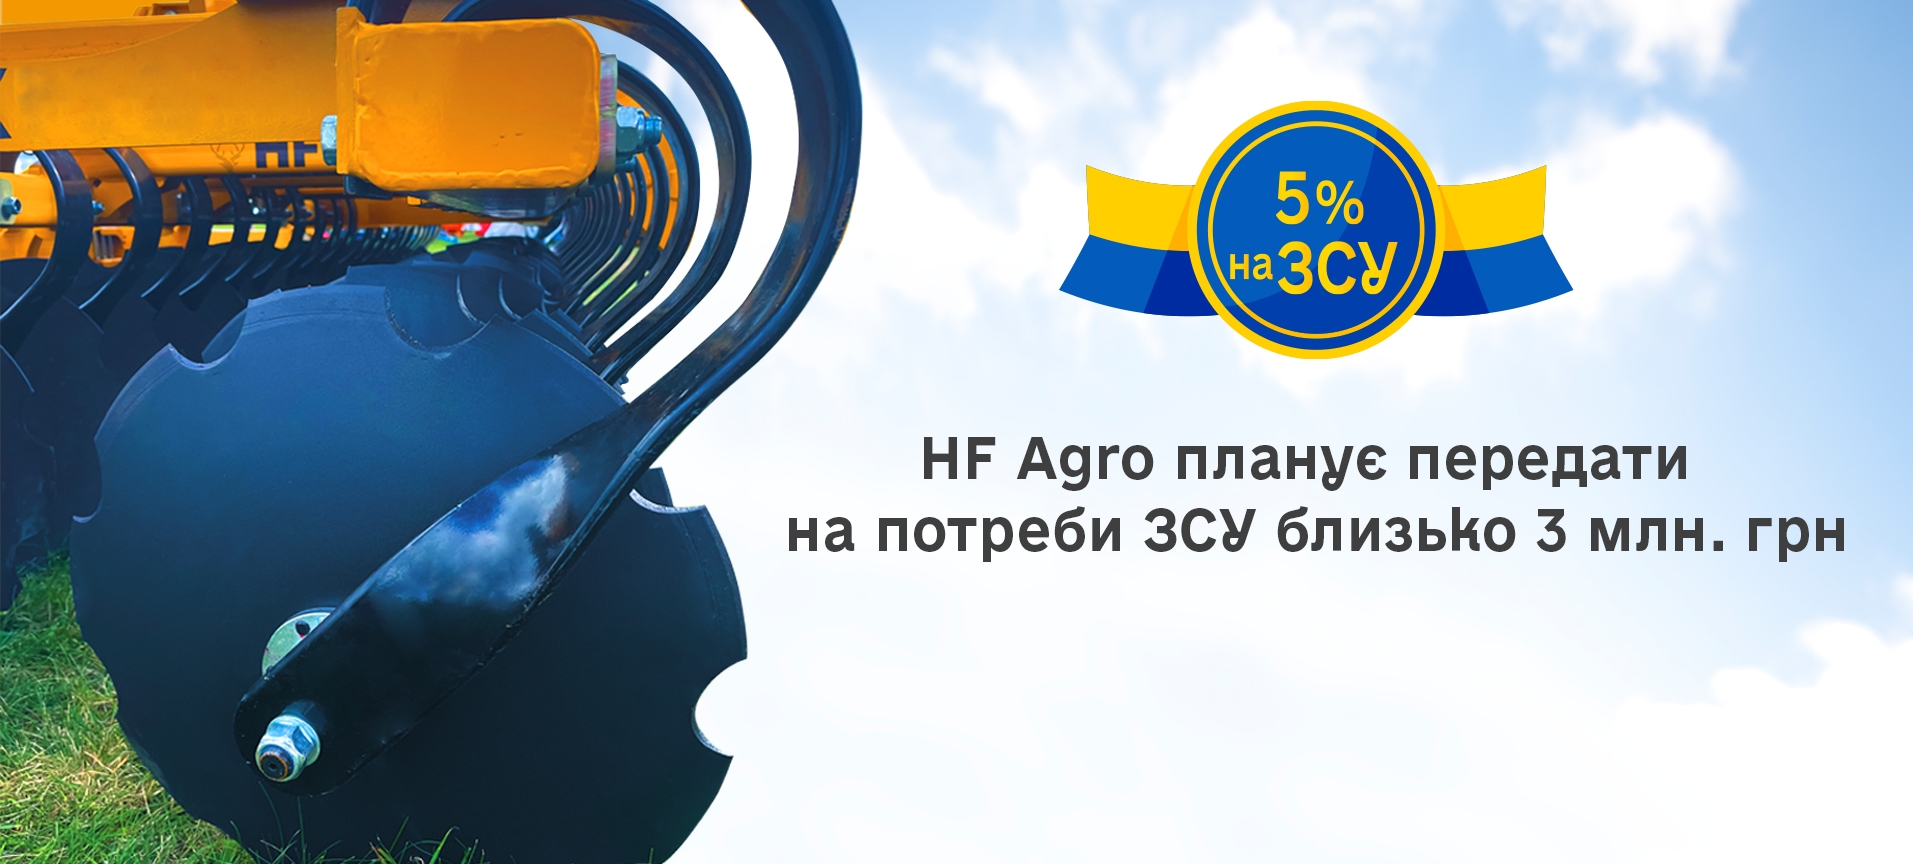 HF Agro планує передати на потреби ЗСУ близько 3 млн грн